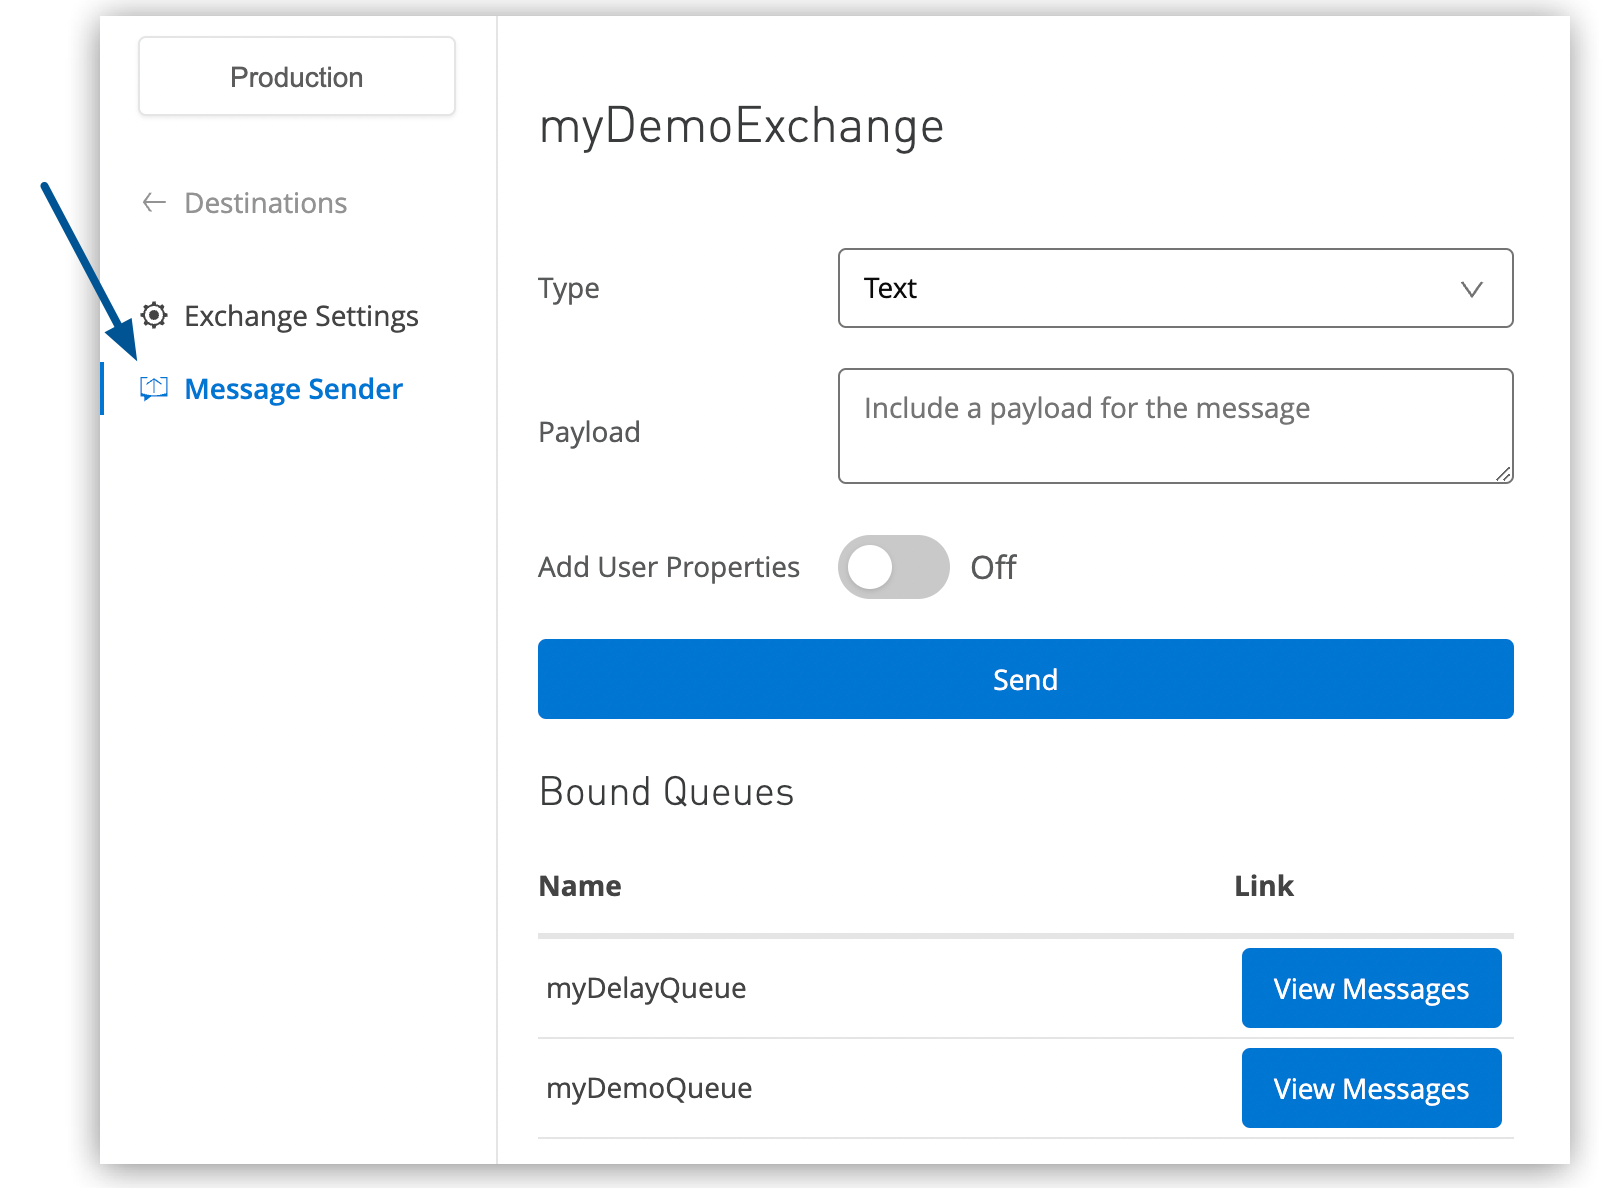 Message Sender option for the exchange